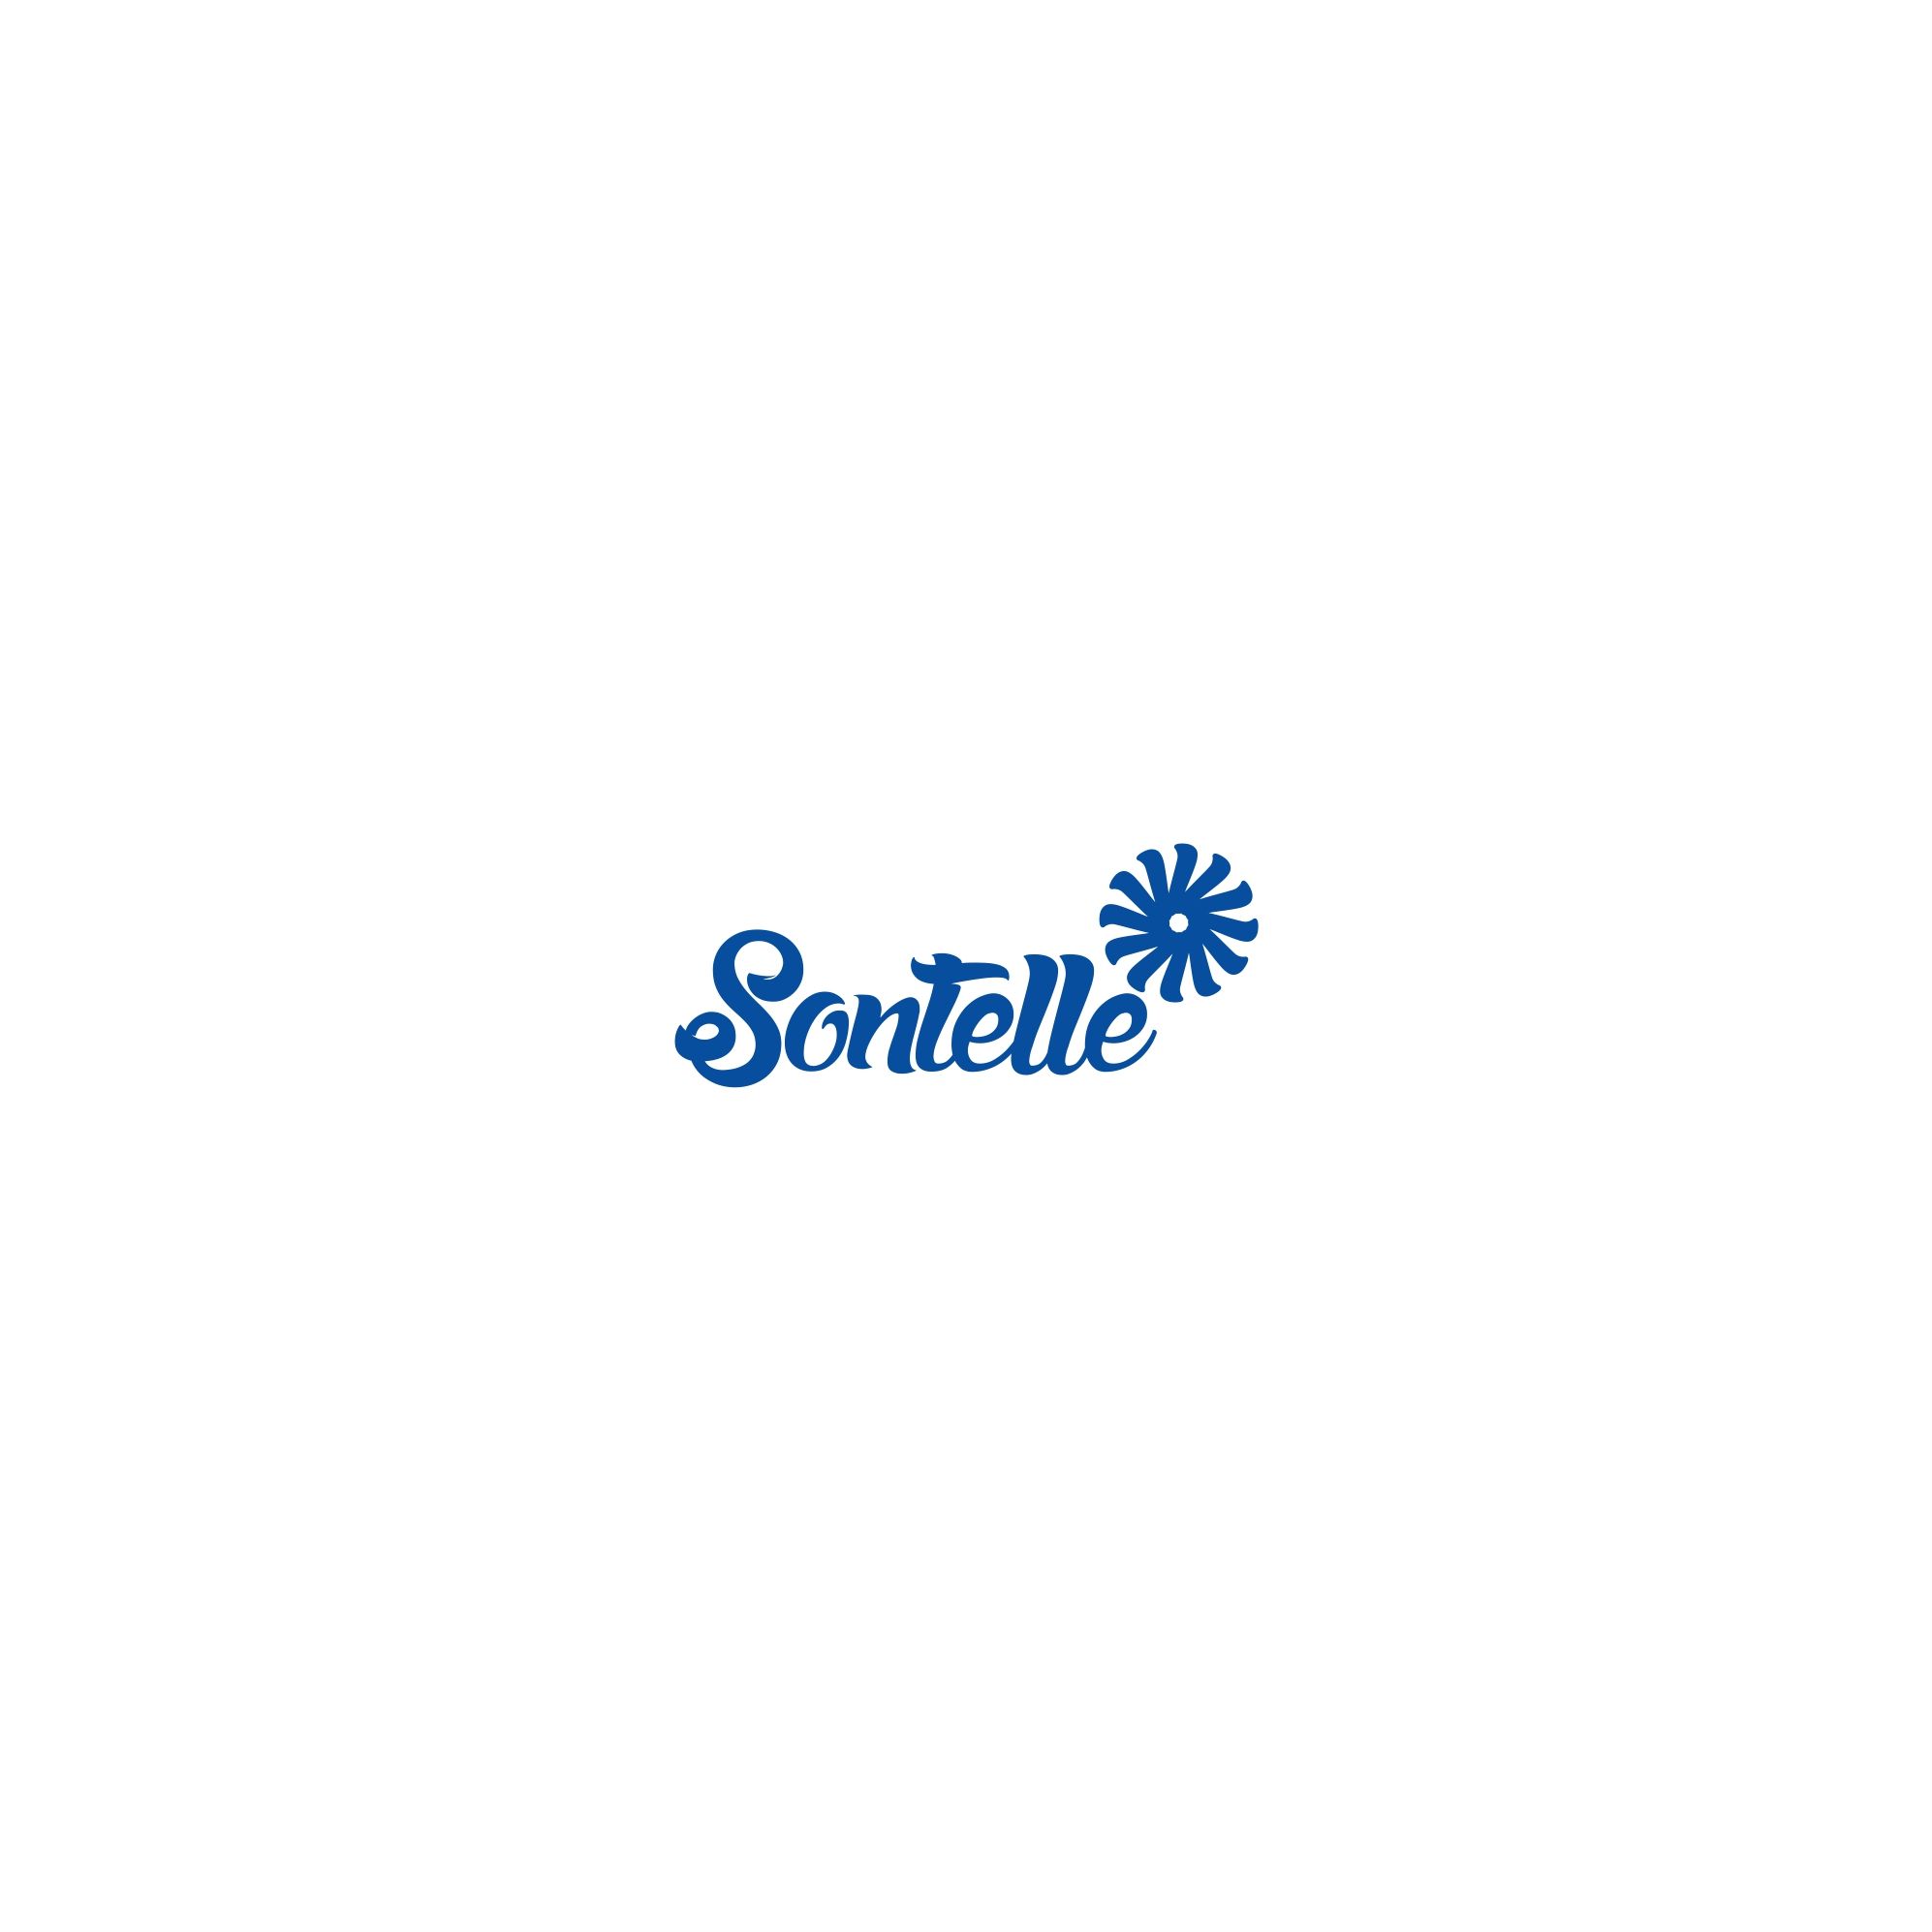 Логотип для  Sontelle SONTELLE sontelle Логотип - дизайнер serz4868